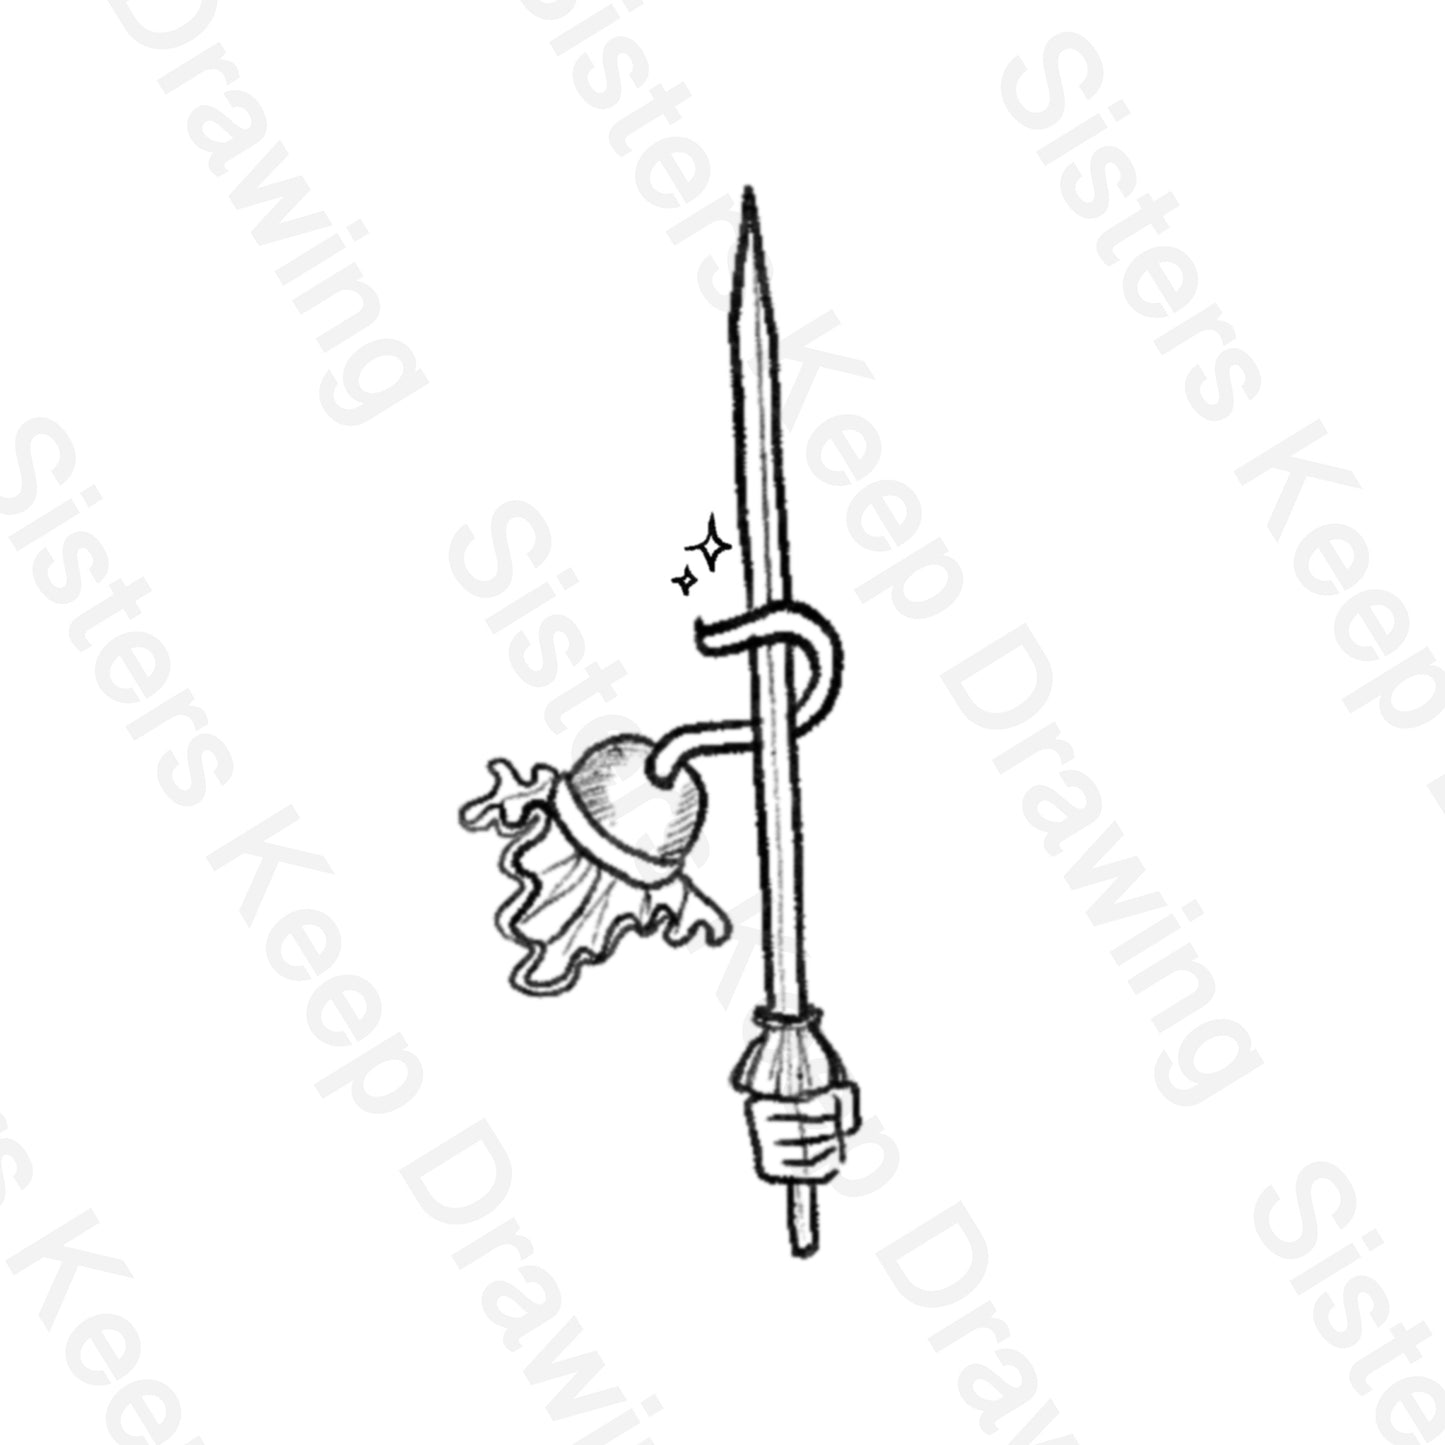 Peter Pan's sword and hooks hook - Tattoo Transparent PNG- instant download digital printable artwork